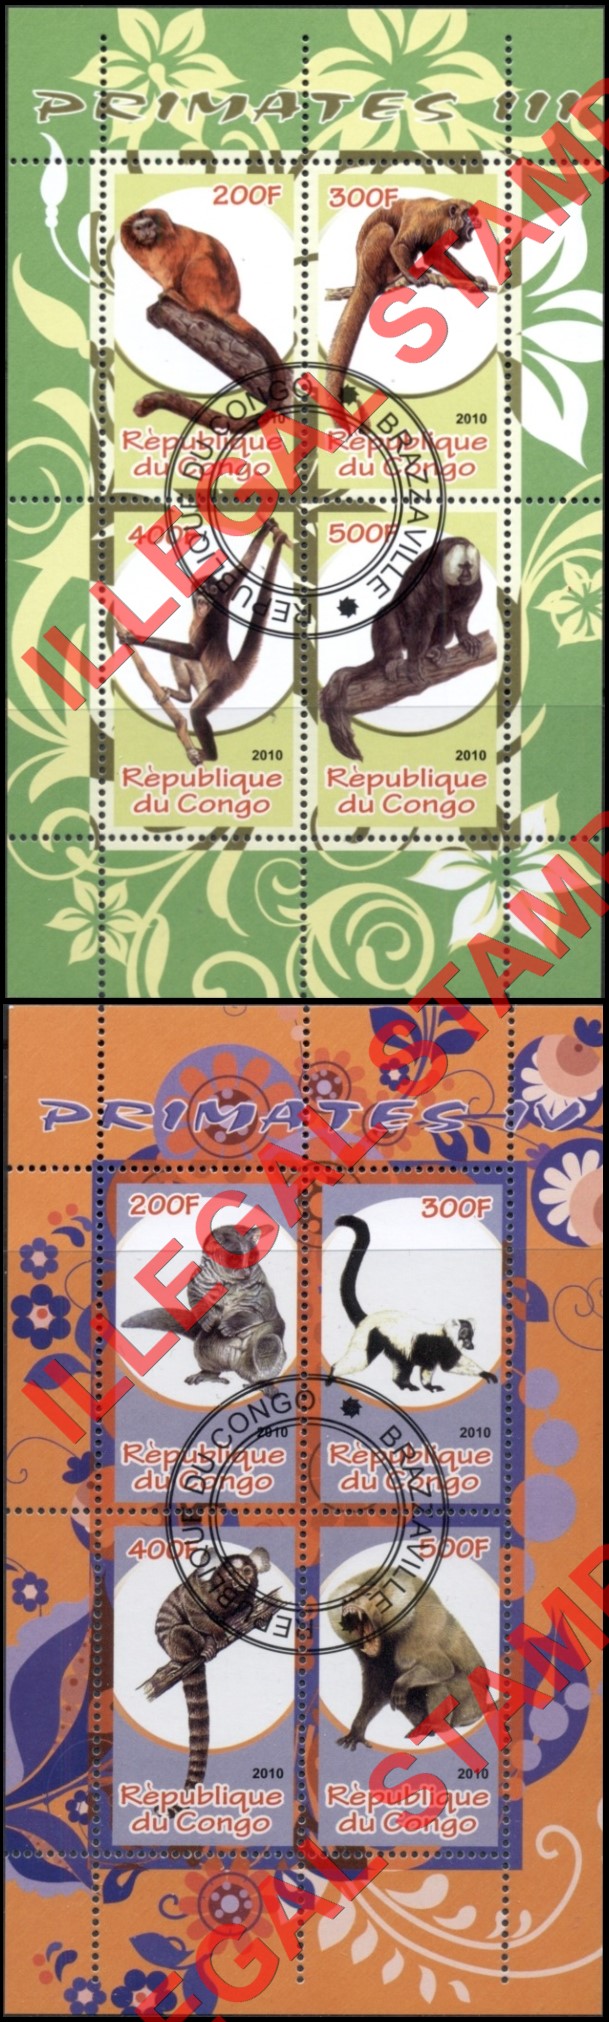 Congo Republic 2010 Primates Illegal Stamp Souvenir Sheets of 4 (Part 2)